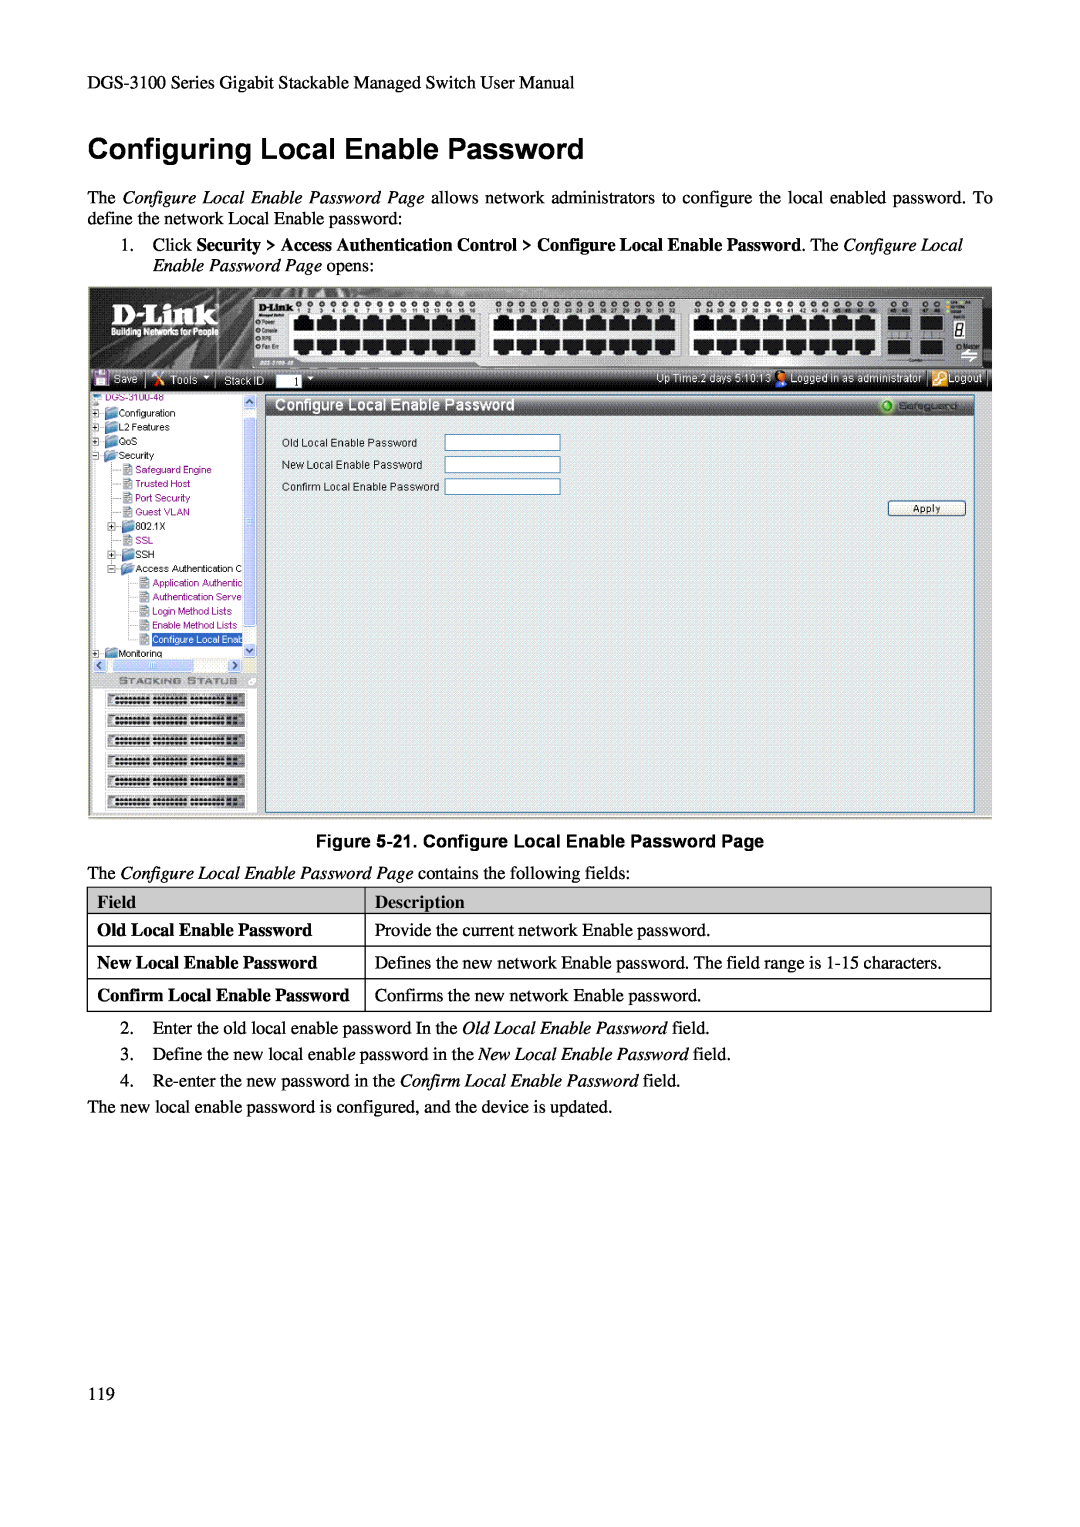 D-Link DGS-3100 user manual Configuring Local Enable Password, 21. Configure Local Enable Password Page, Field, Description 